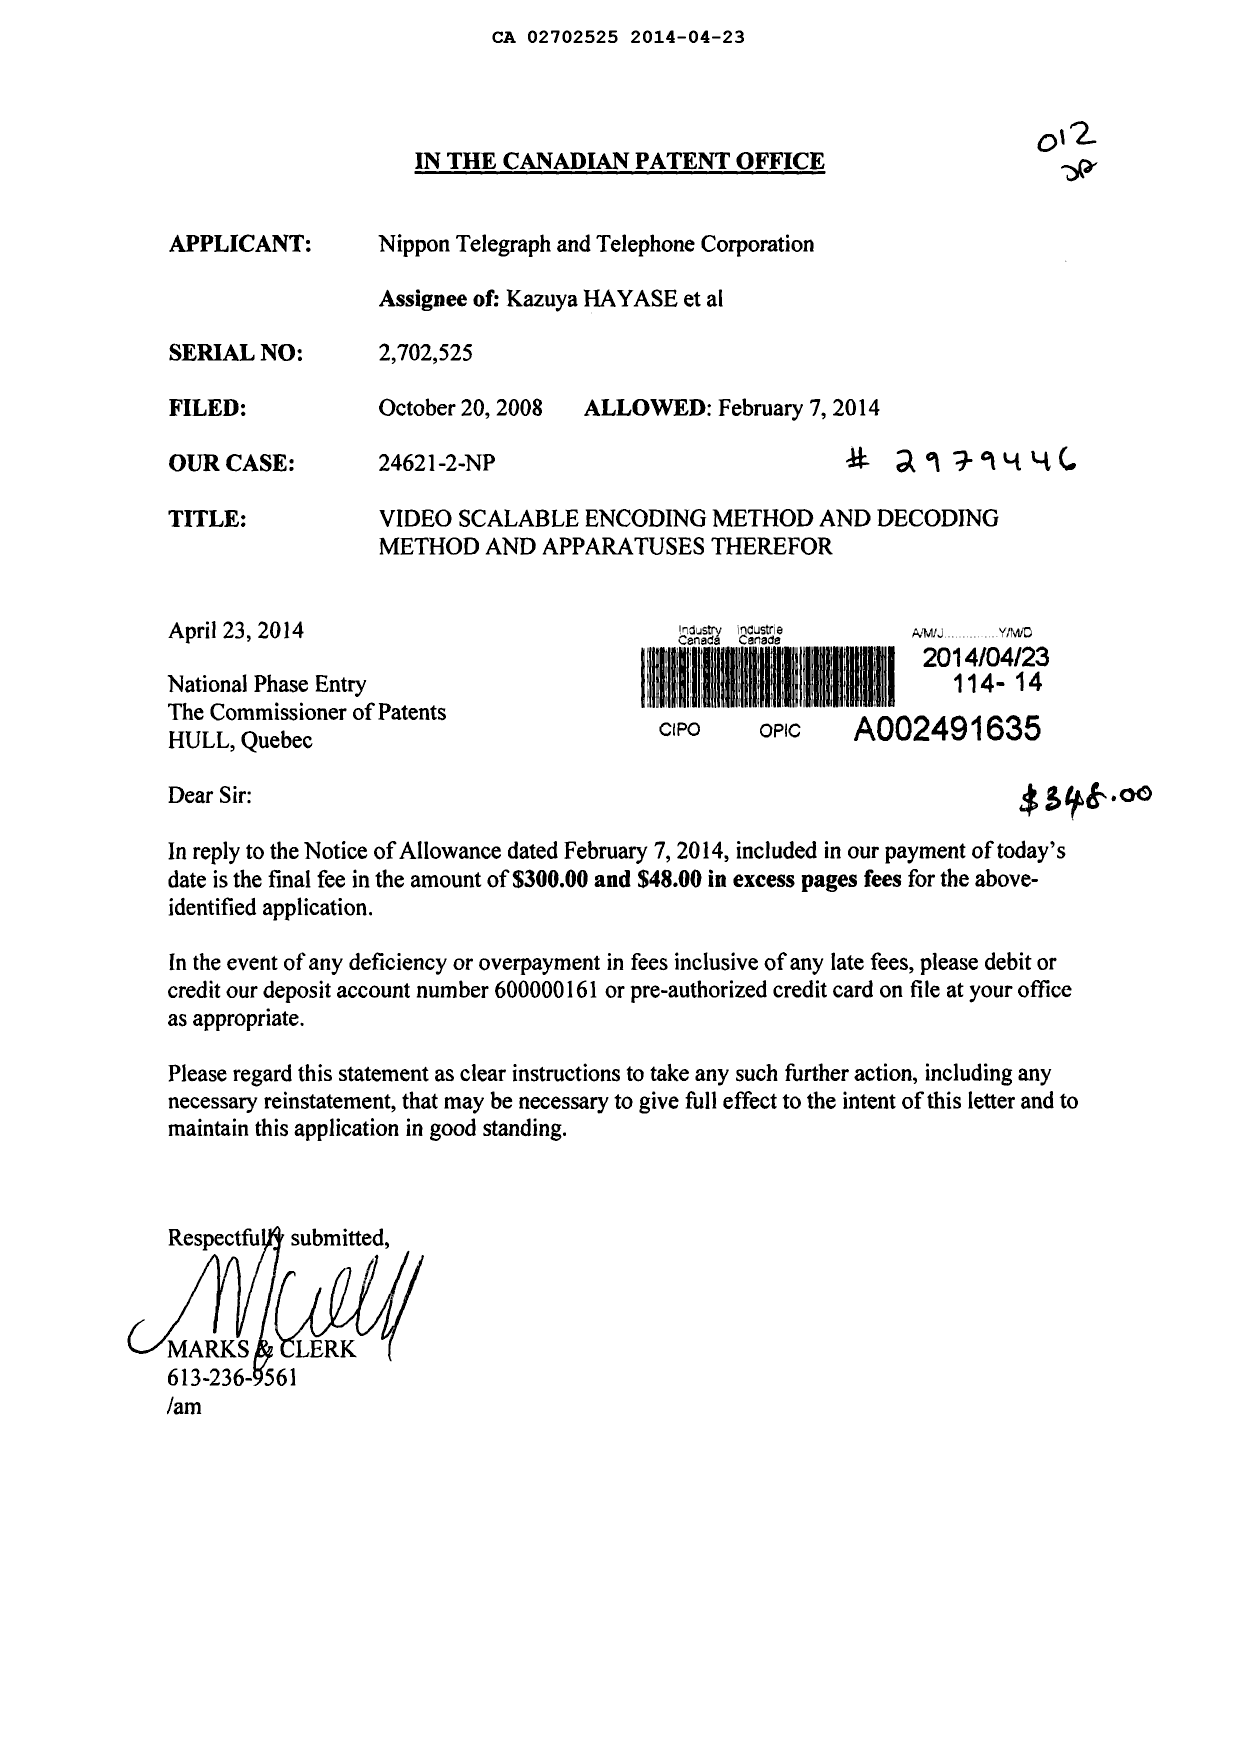 Canadian Patent Document 2702525. Correspondence 20140423. Image 1 of 1